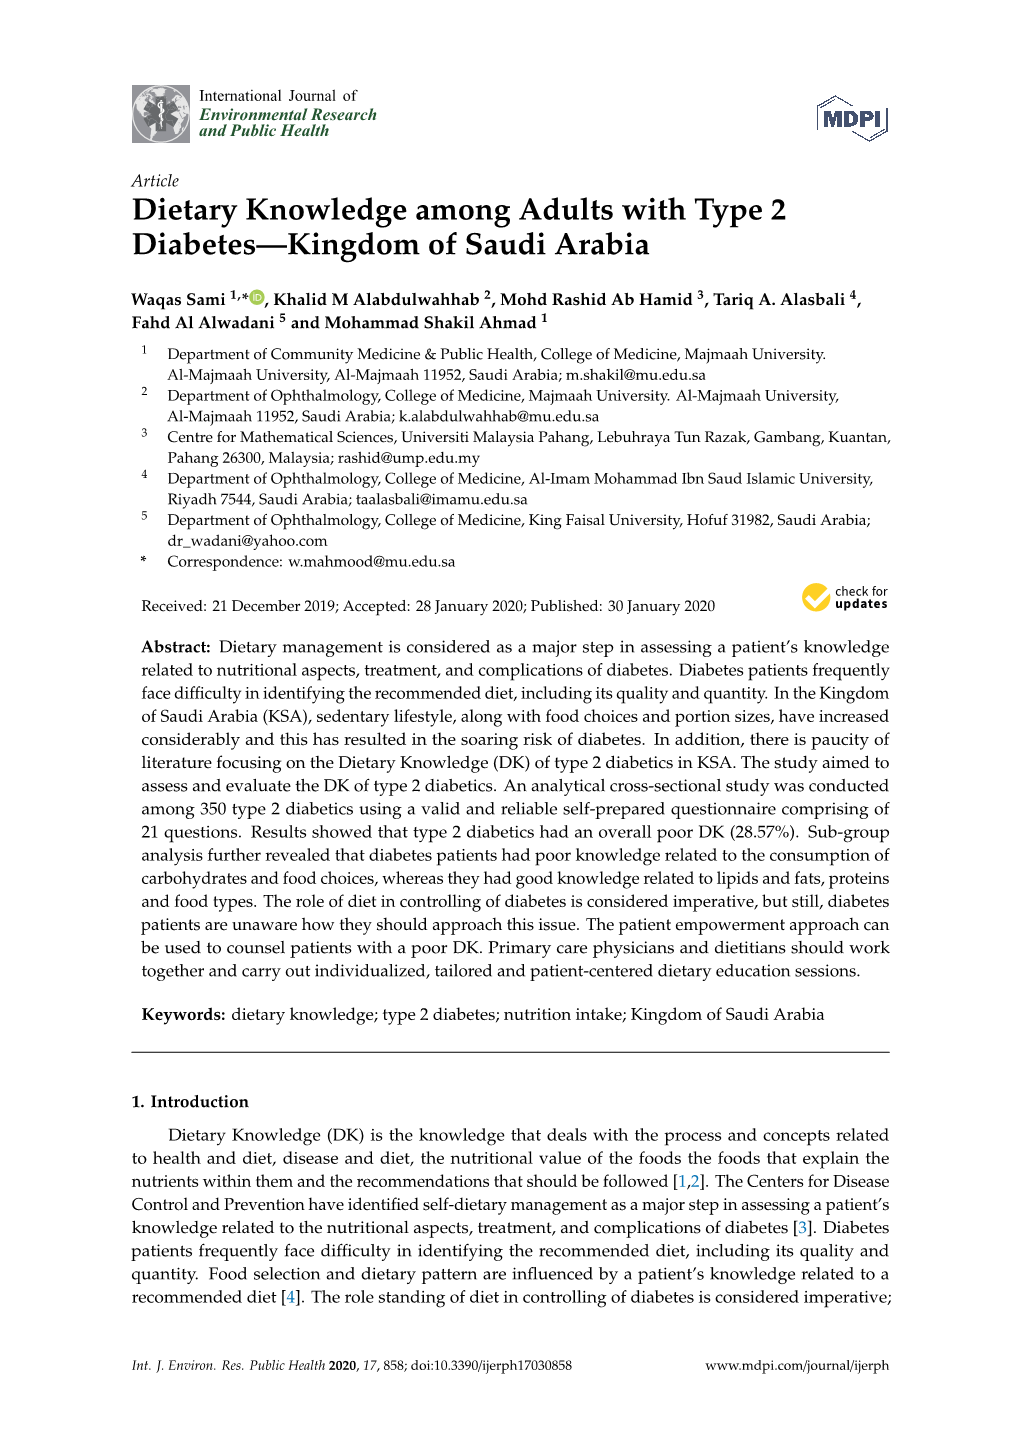 Dietary Knowledge Among Adults with Type 2 Diabetes—Kingdom of Saudi Arabia